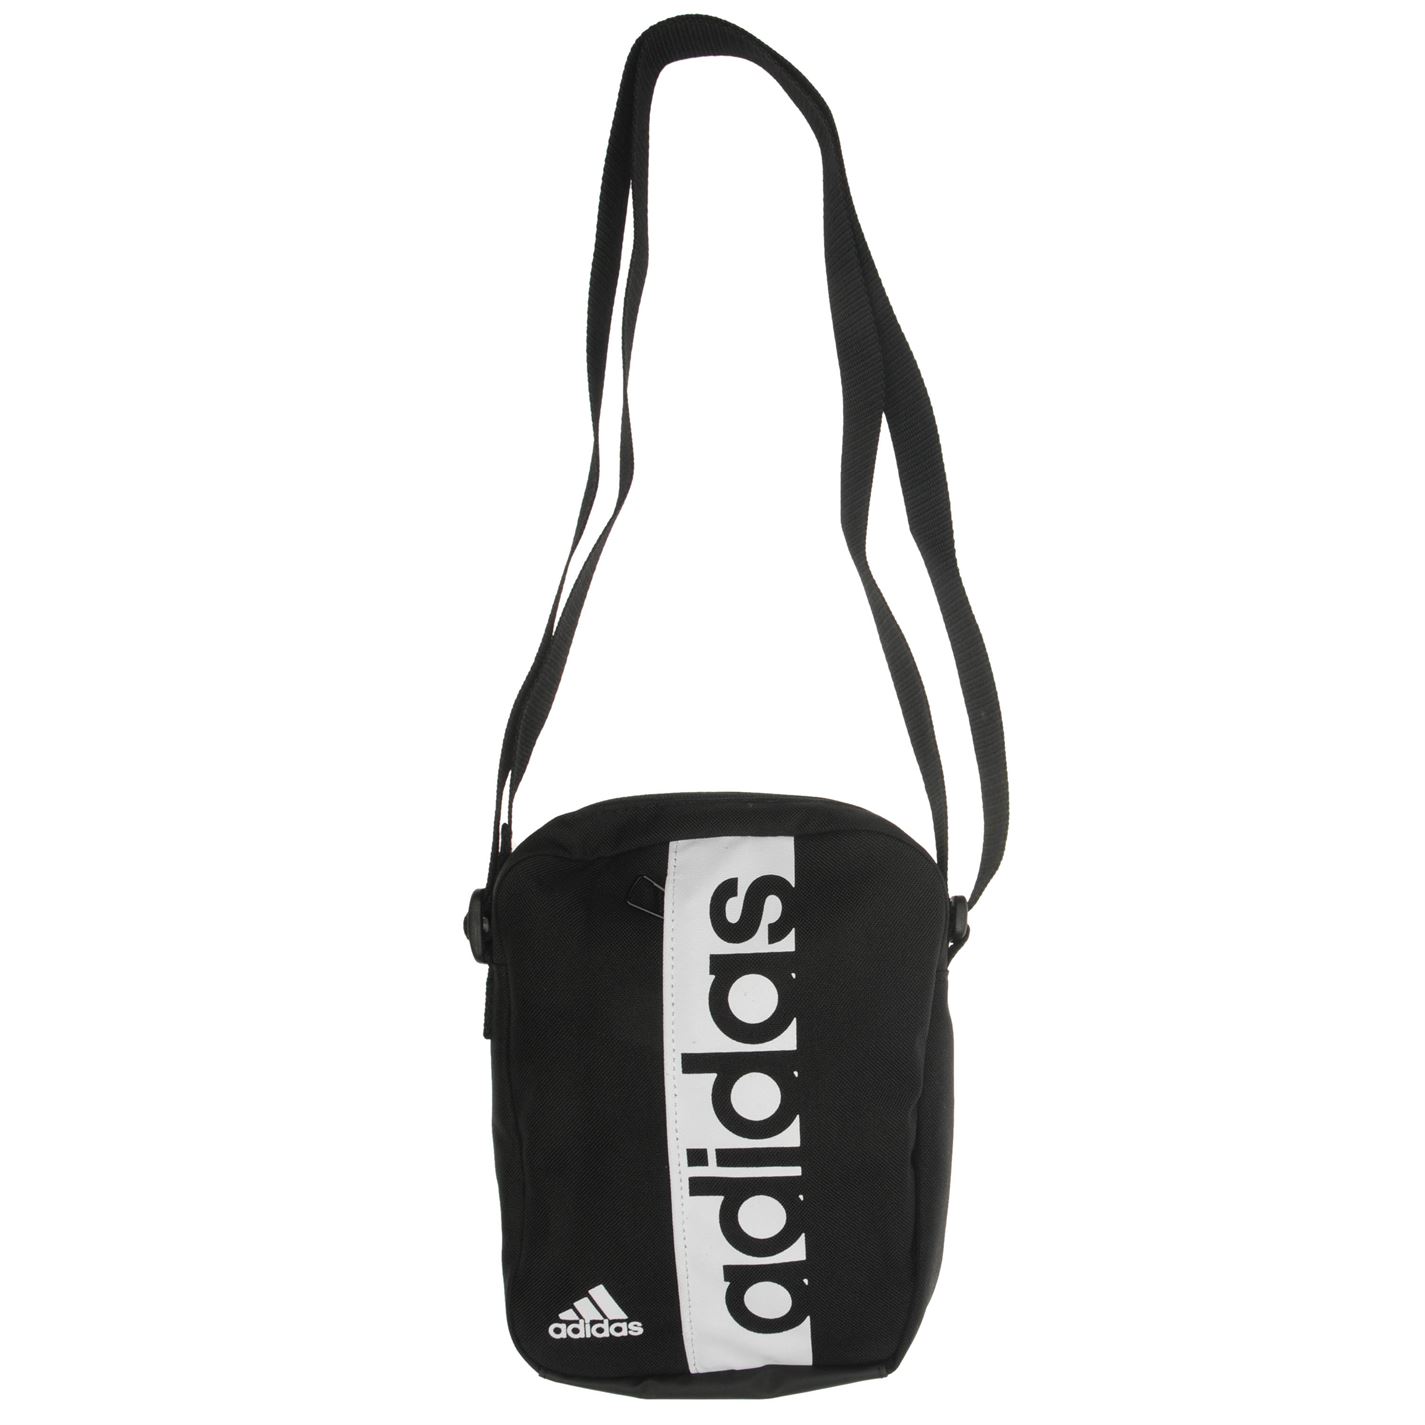 adidas Unisex Linear Organiser Bag Shoulder Zip | eBay